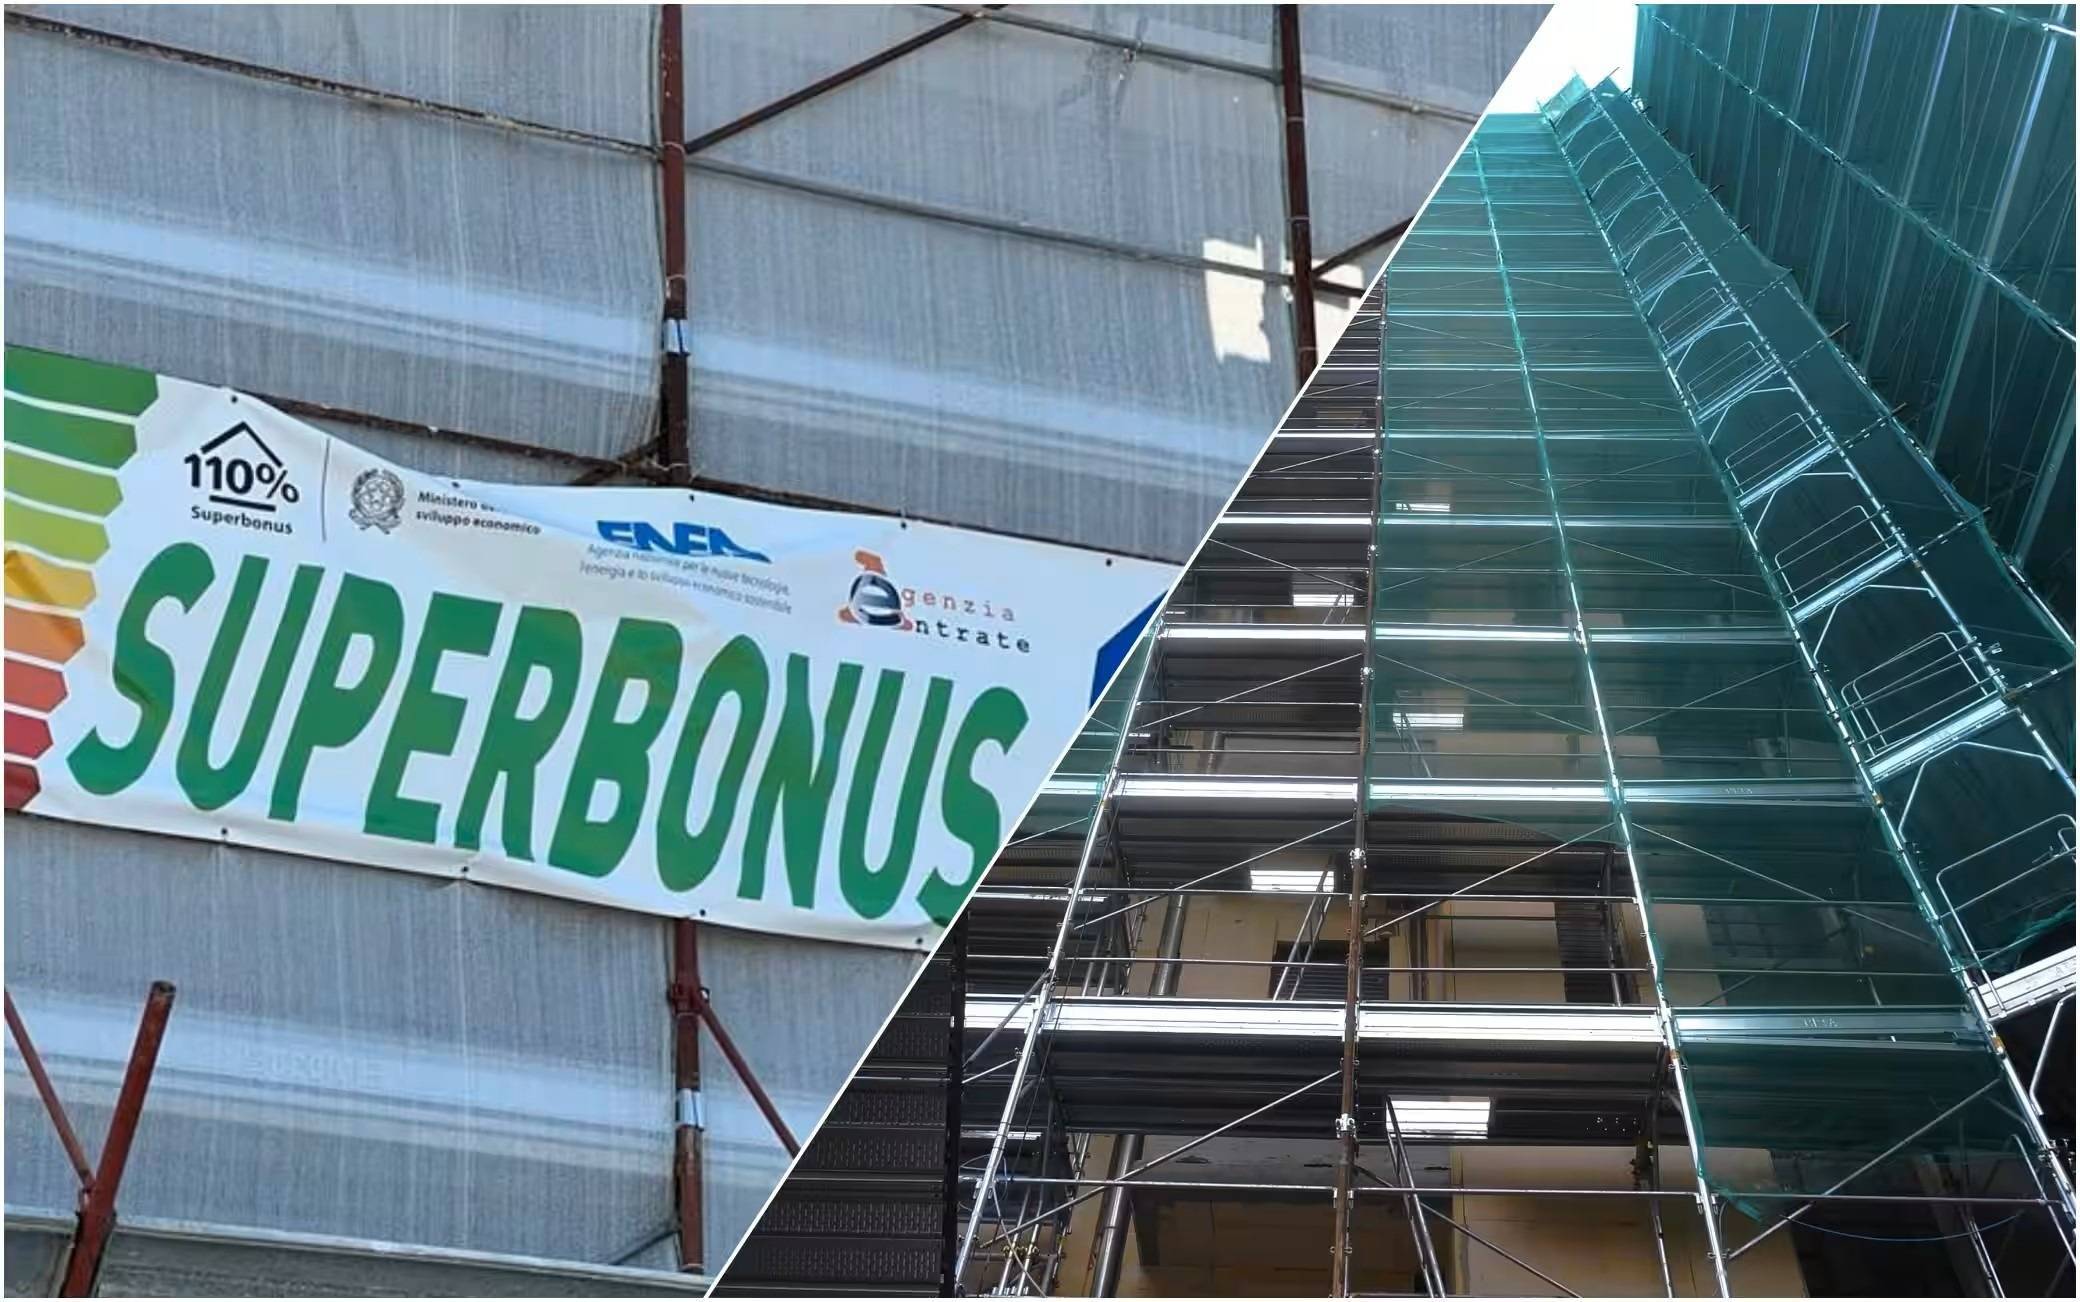 Superbonus: I Crediti Bloccati Verranno Acquistati Da Enel X